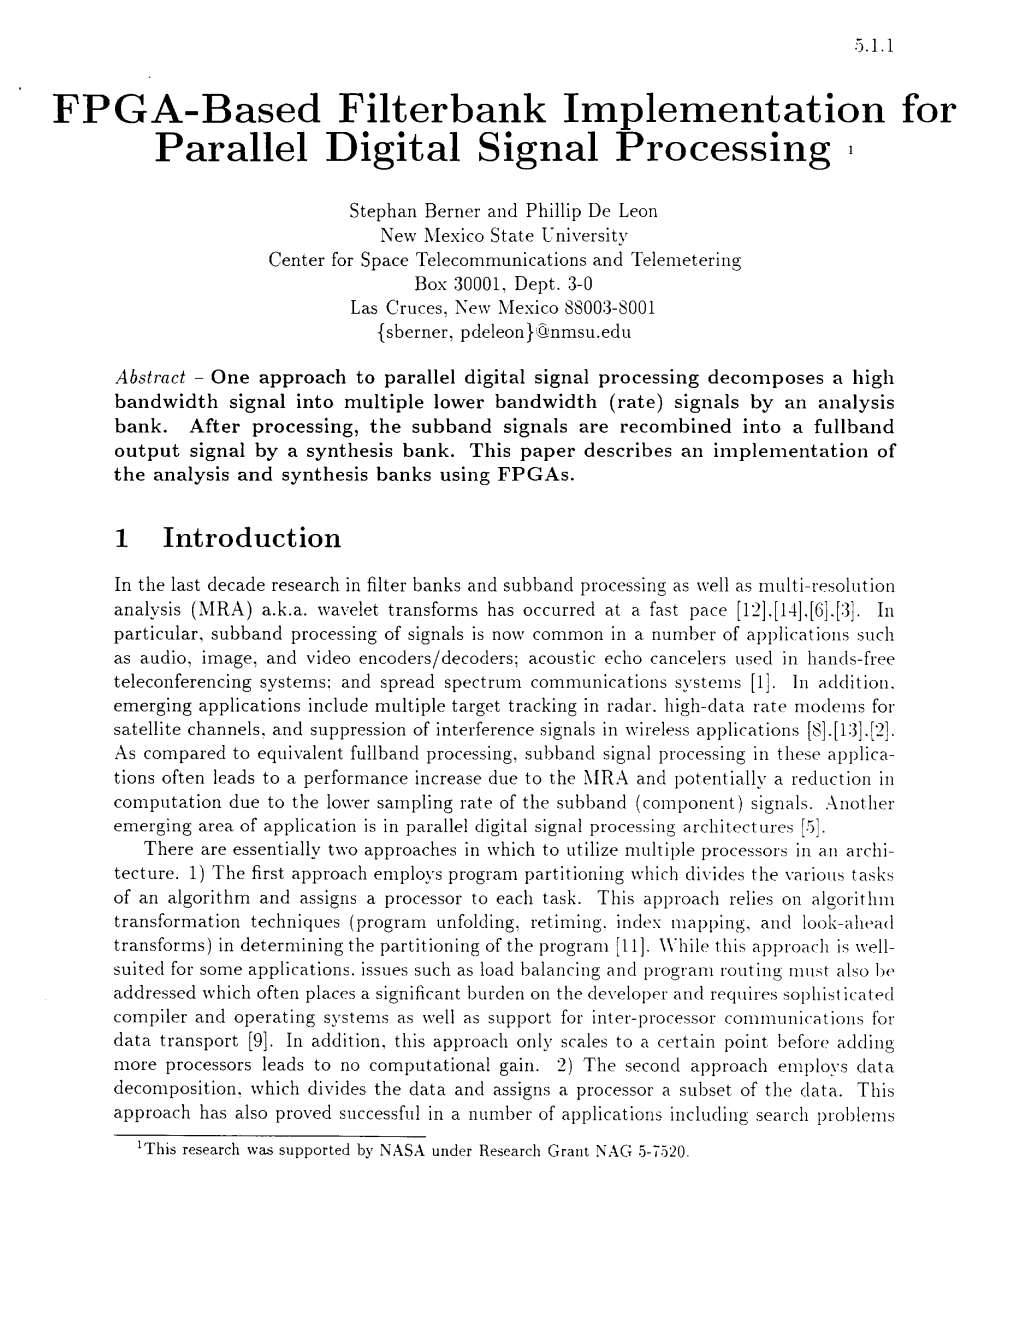 FPGA-Based Filterbank Implementation for Parallel Digital Signal Processing 1